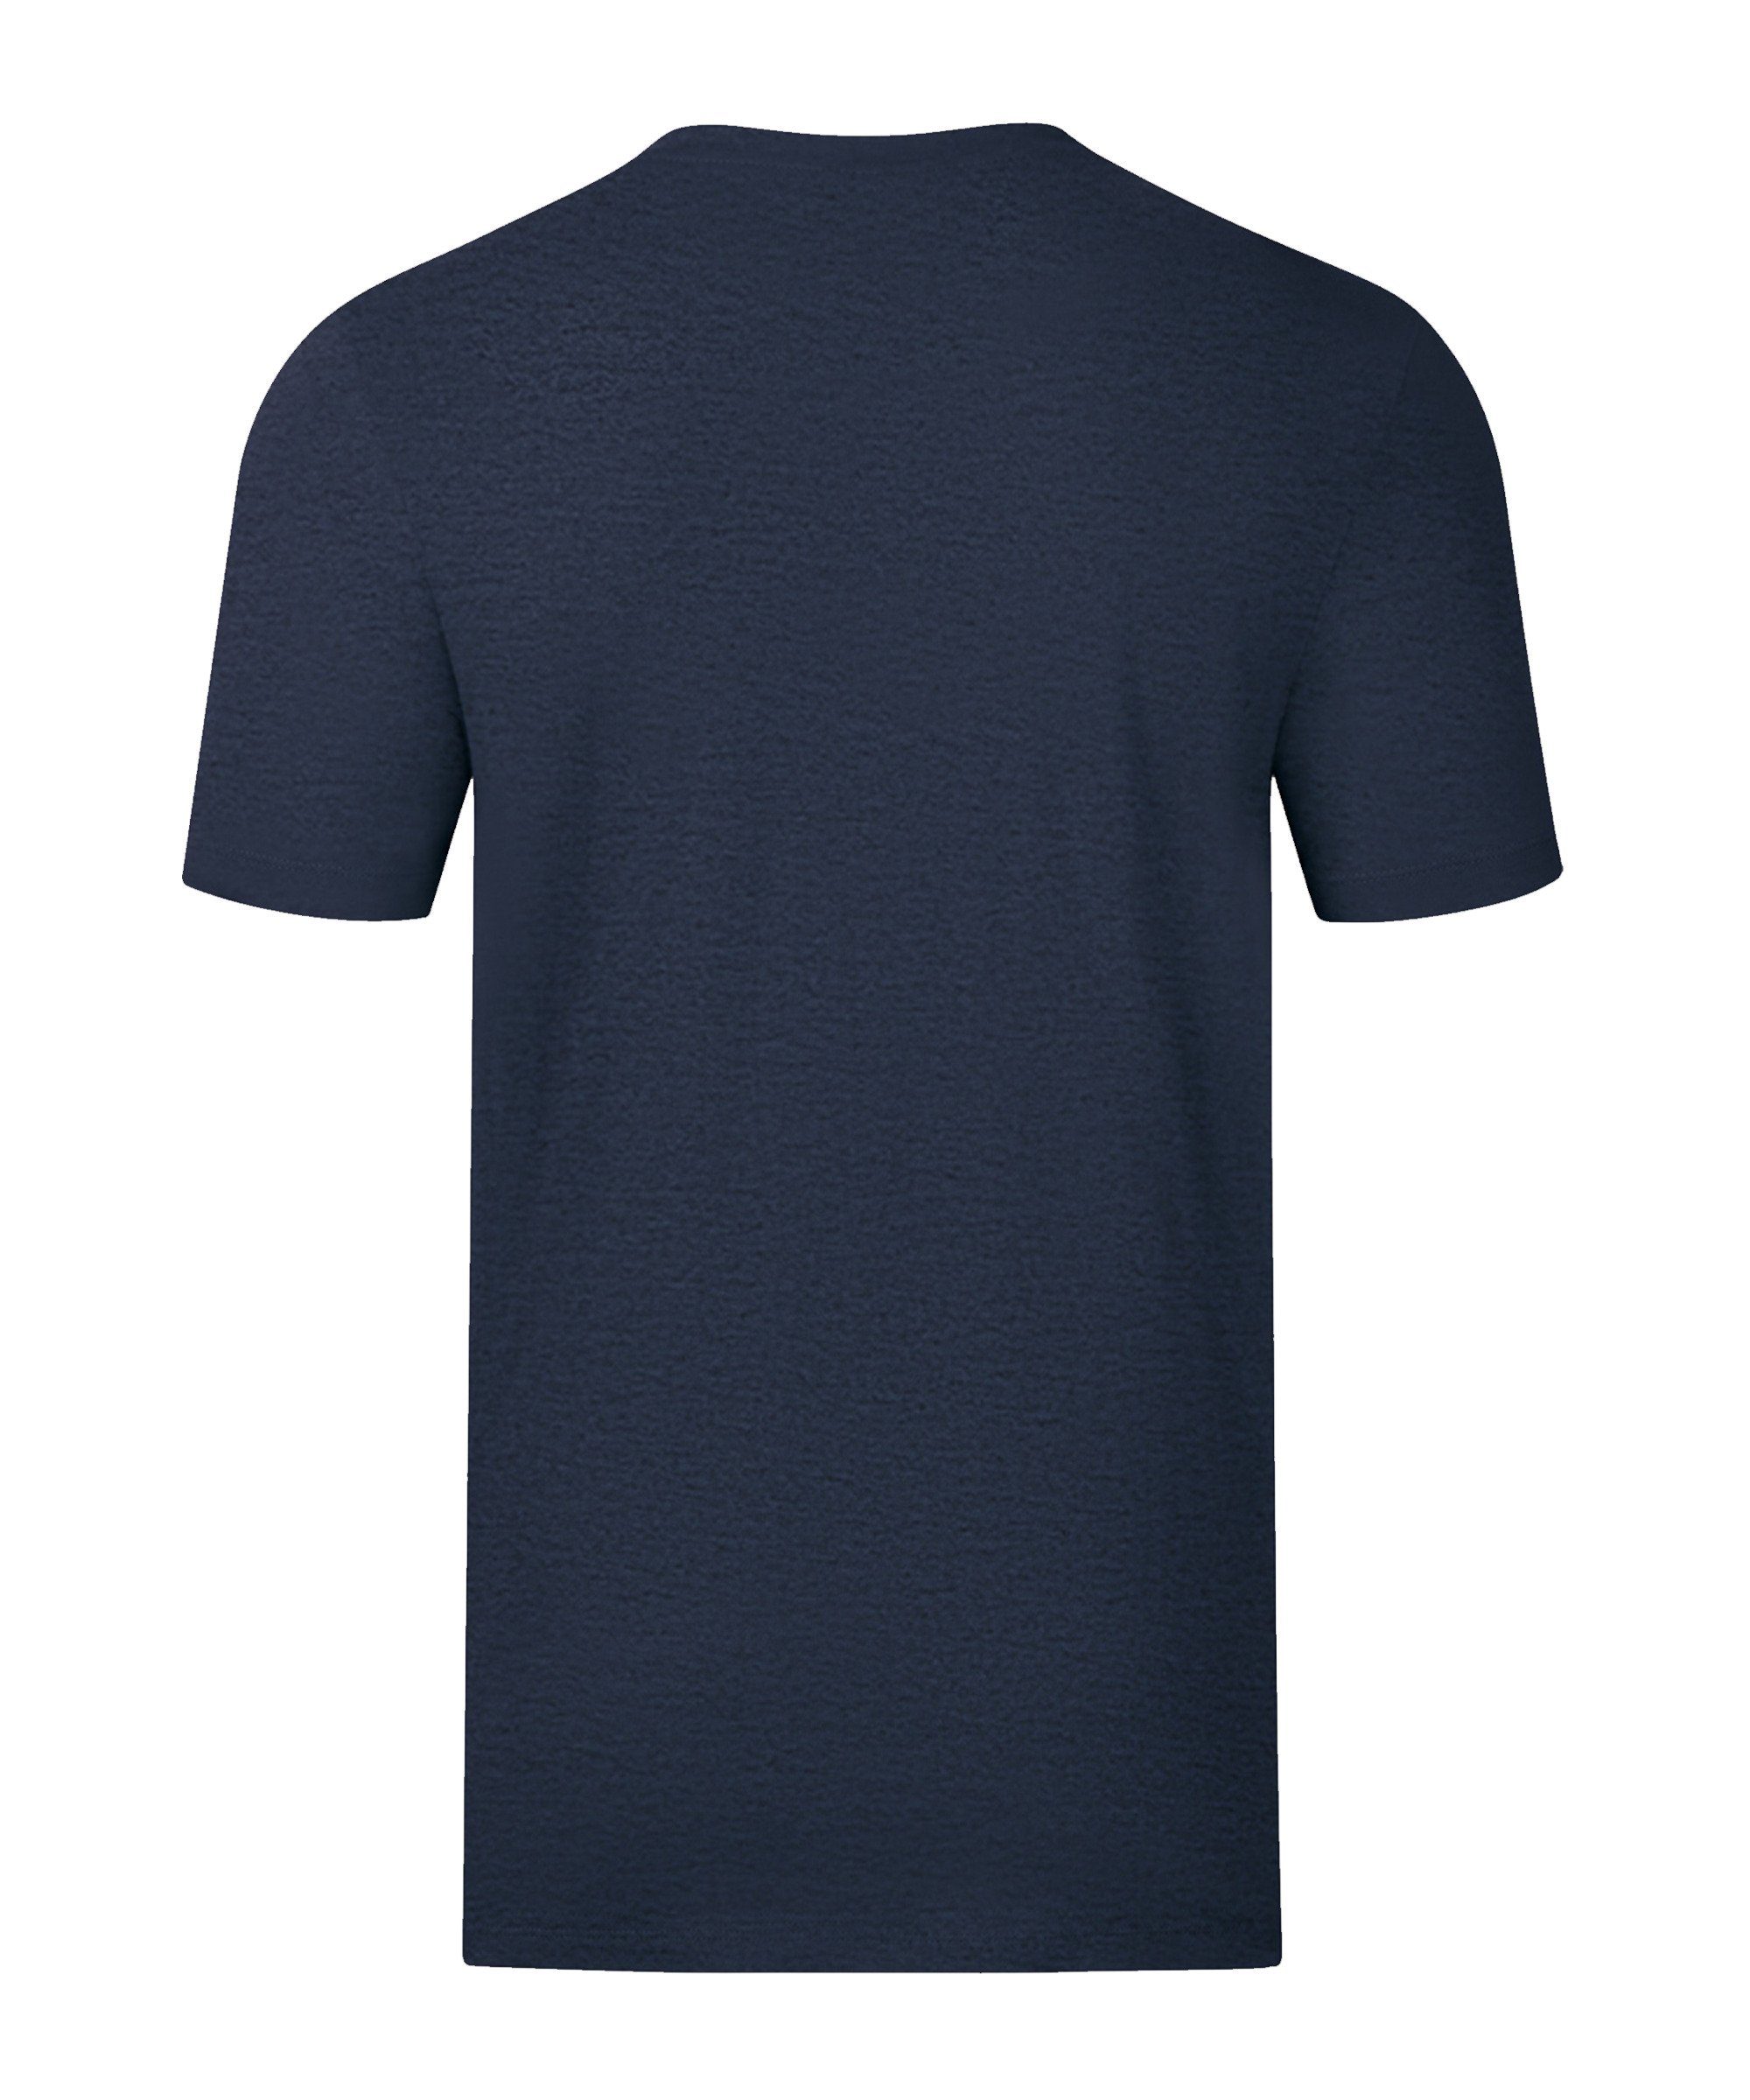 T-Shirt blaugelb Jako default T-Shirt Promo